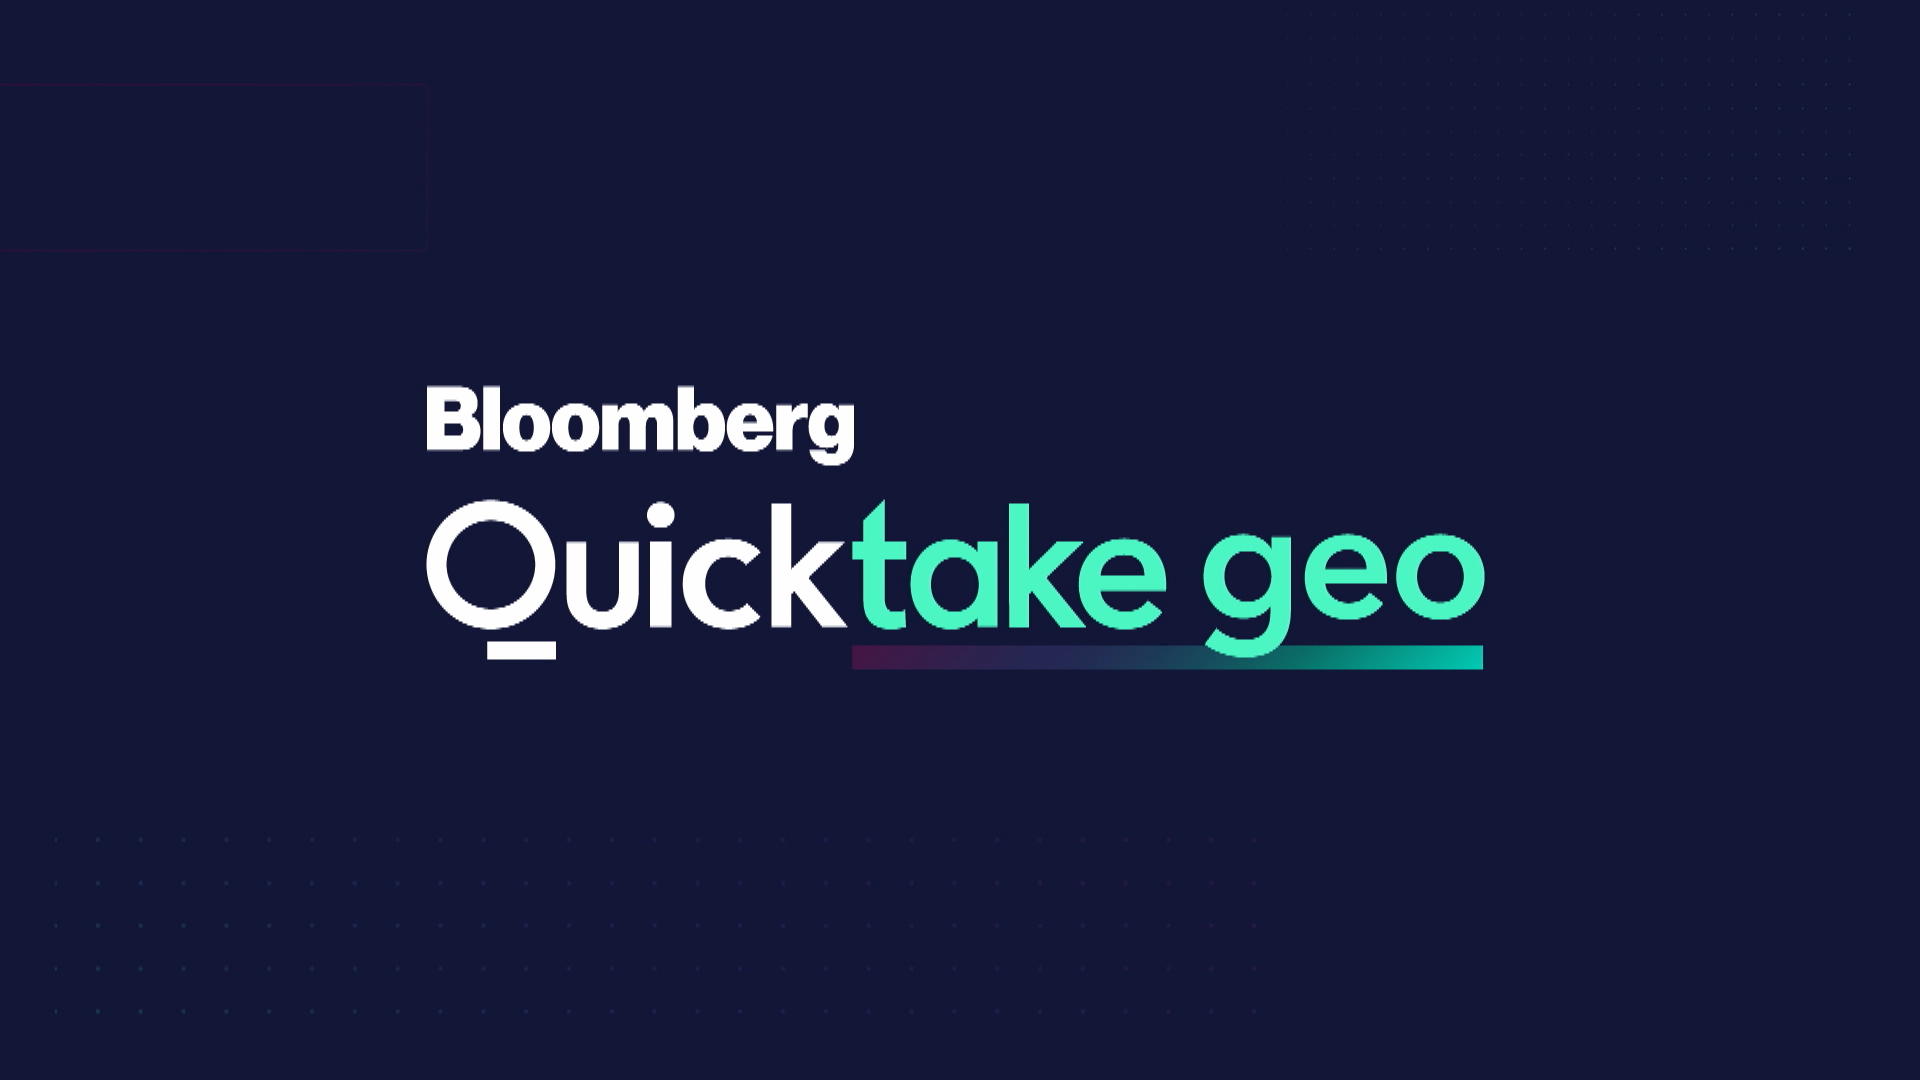 Bloomberg Quicktake “Geo” (03/08/2021)